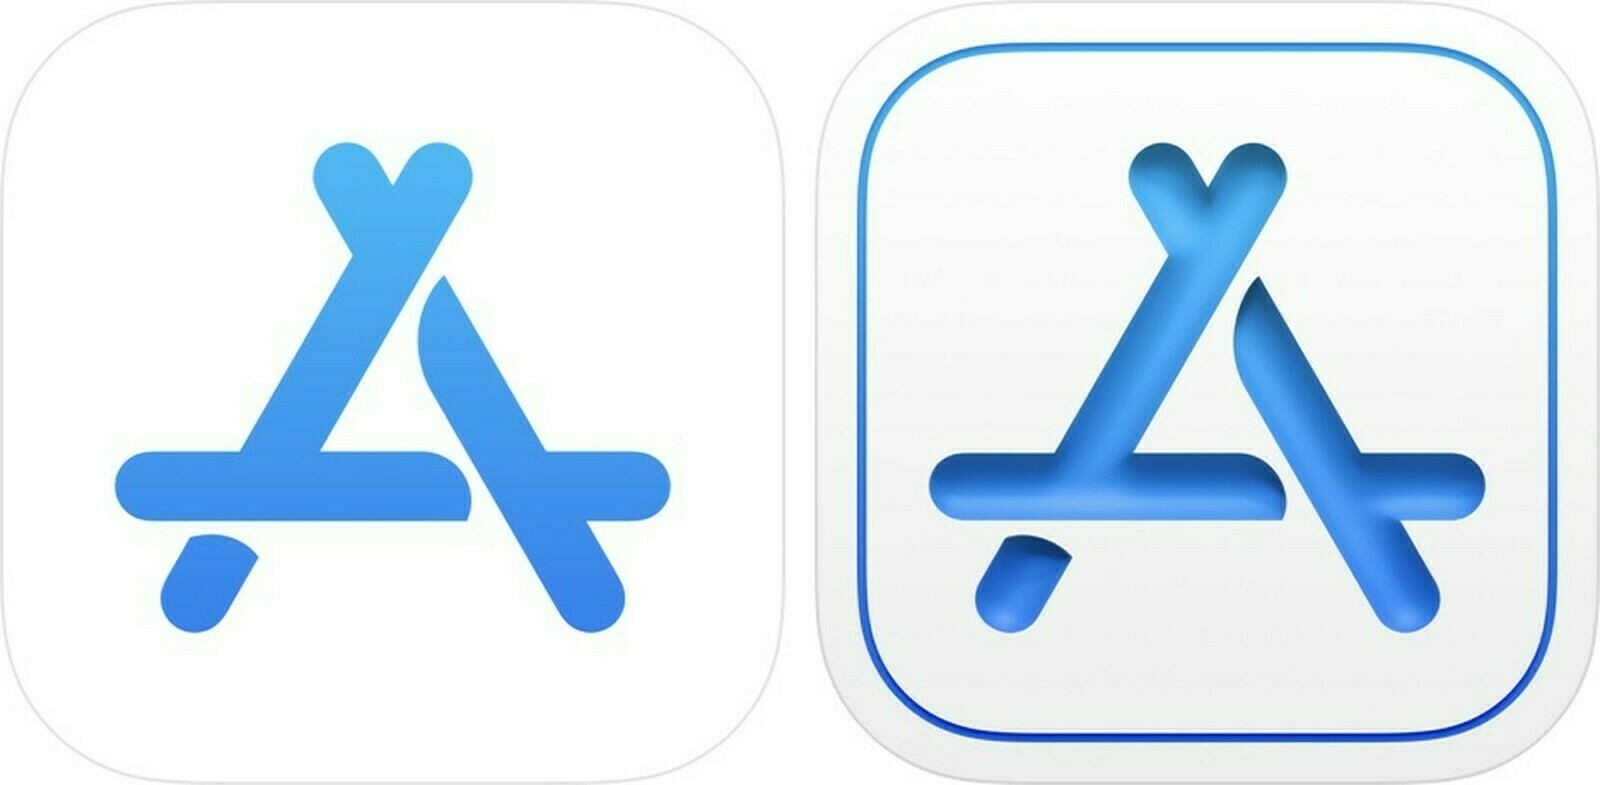 New App Store icon design language?